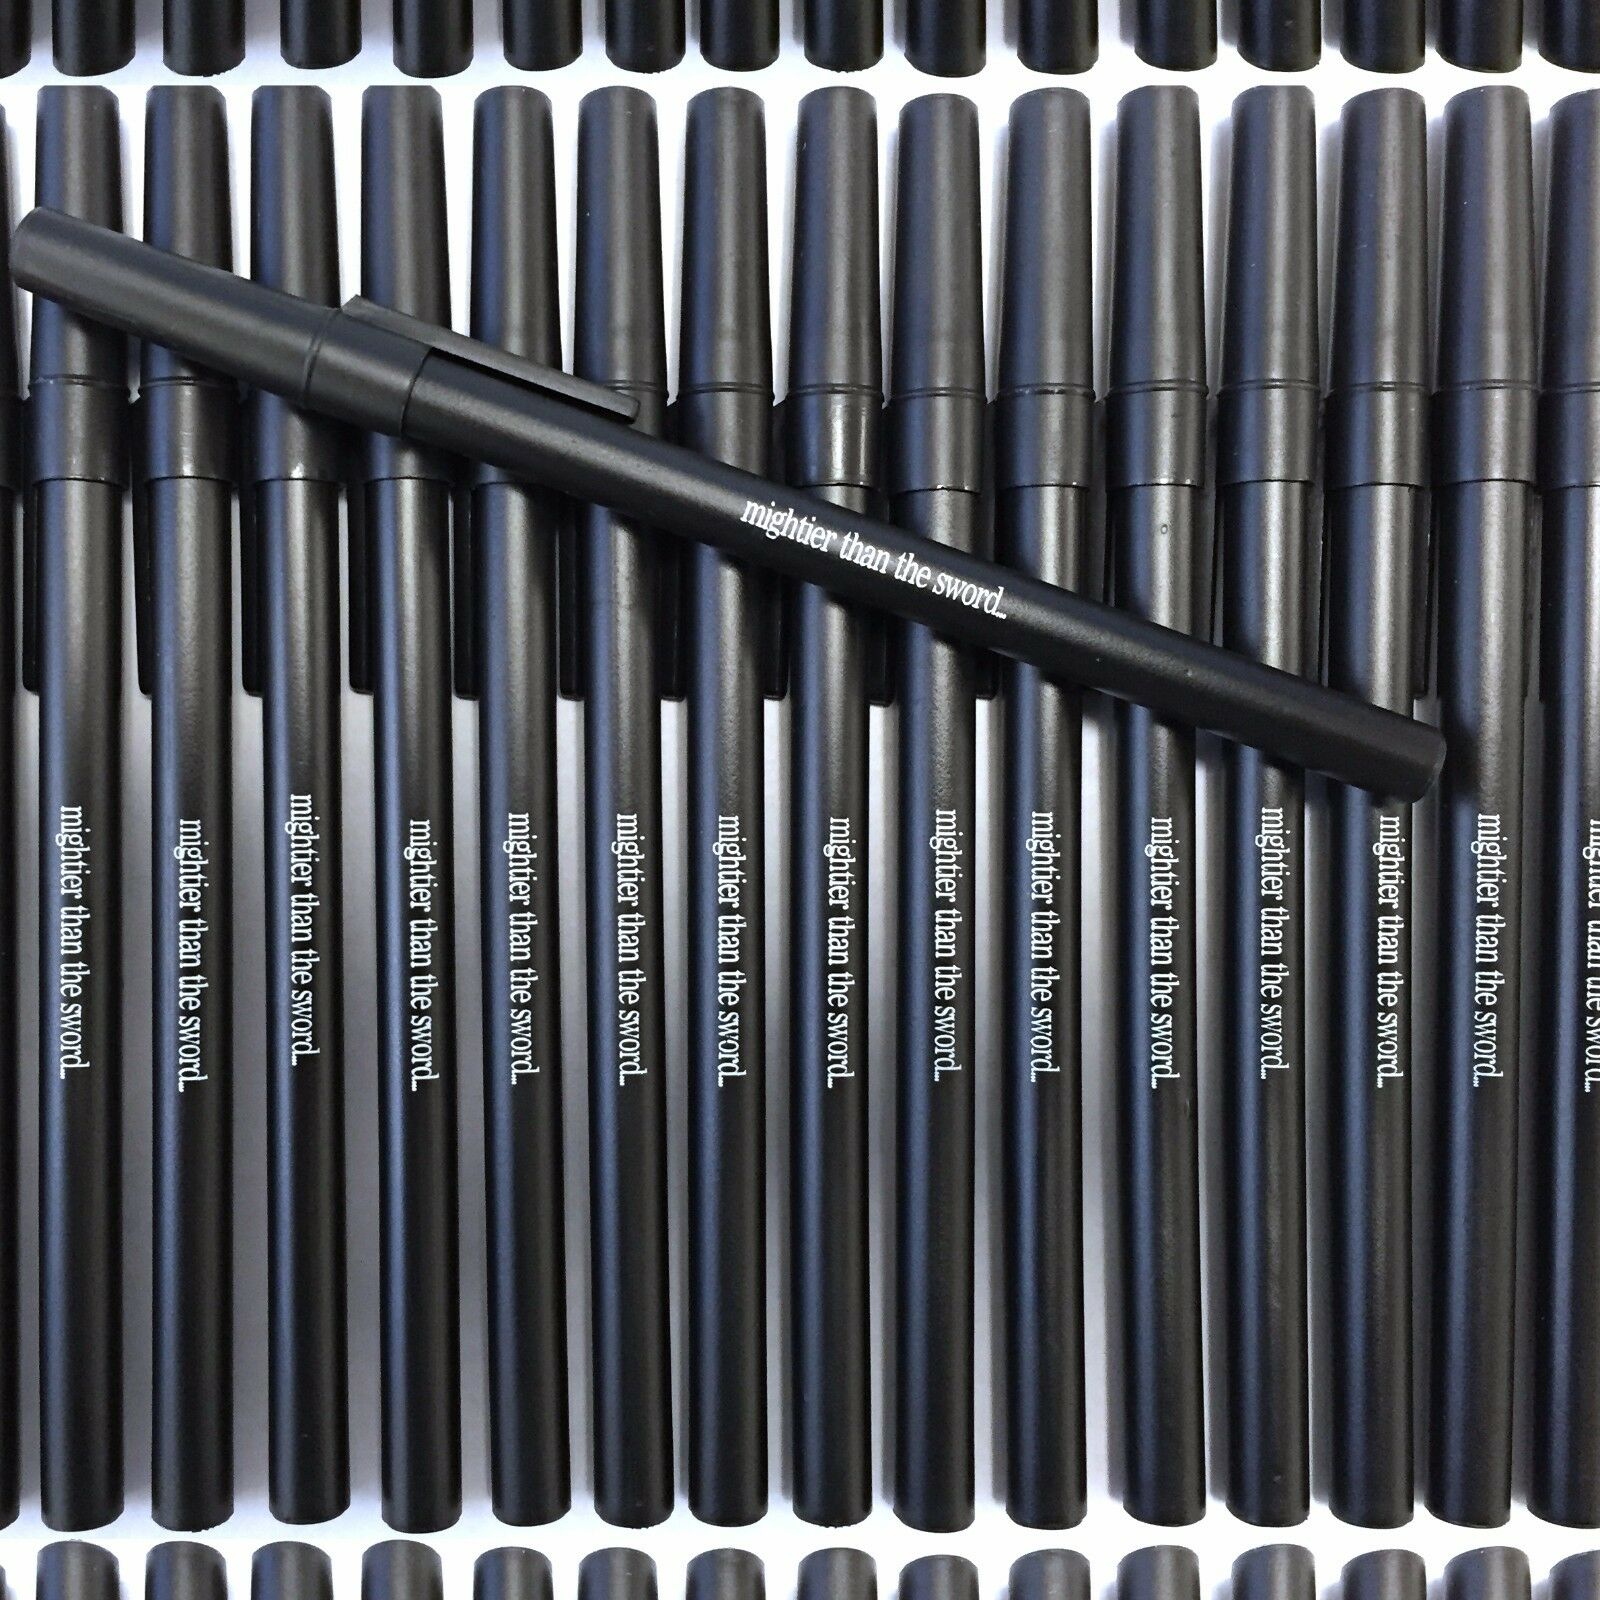 Misprint Pens 50 Pcs Ball Point Ink Wholesale Lot Bic Round Stic Style Black Cap